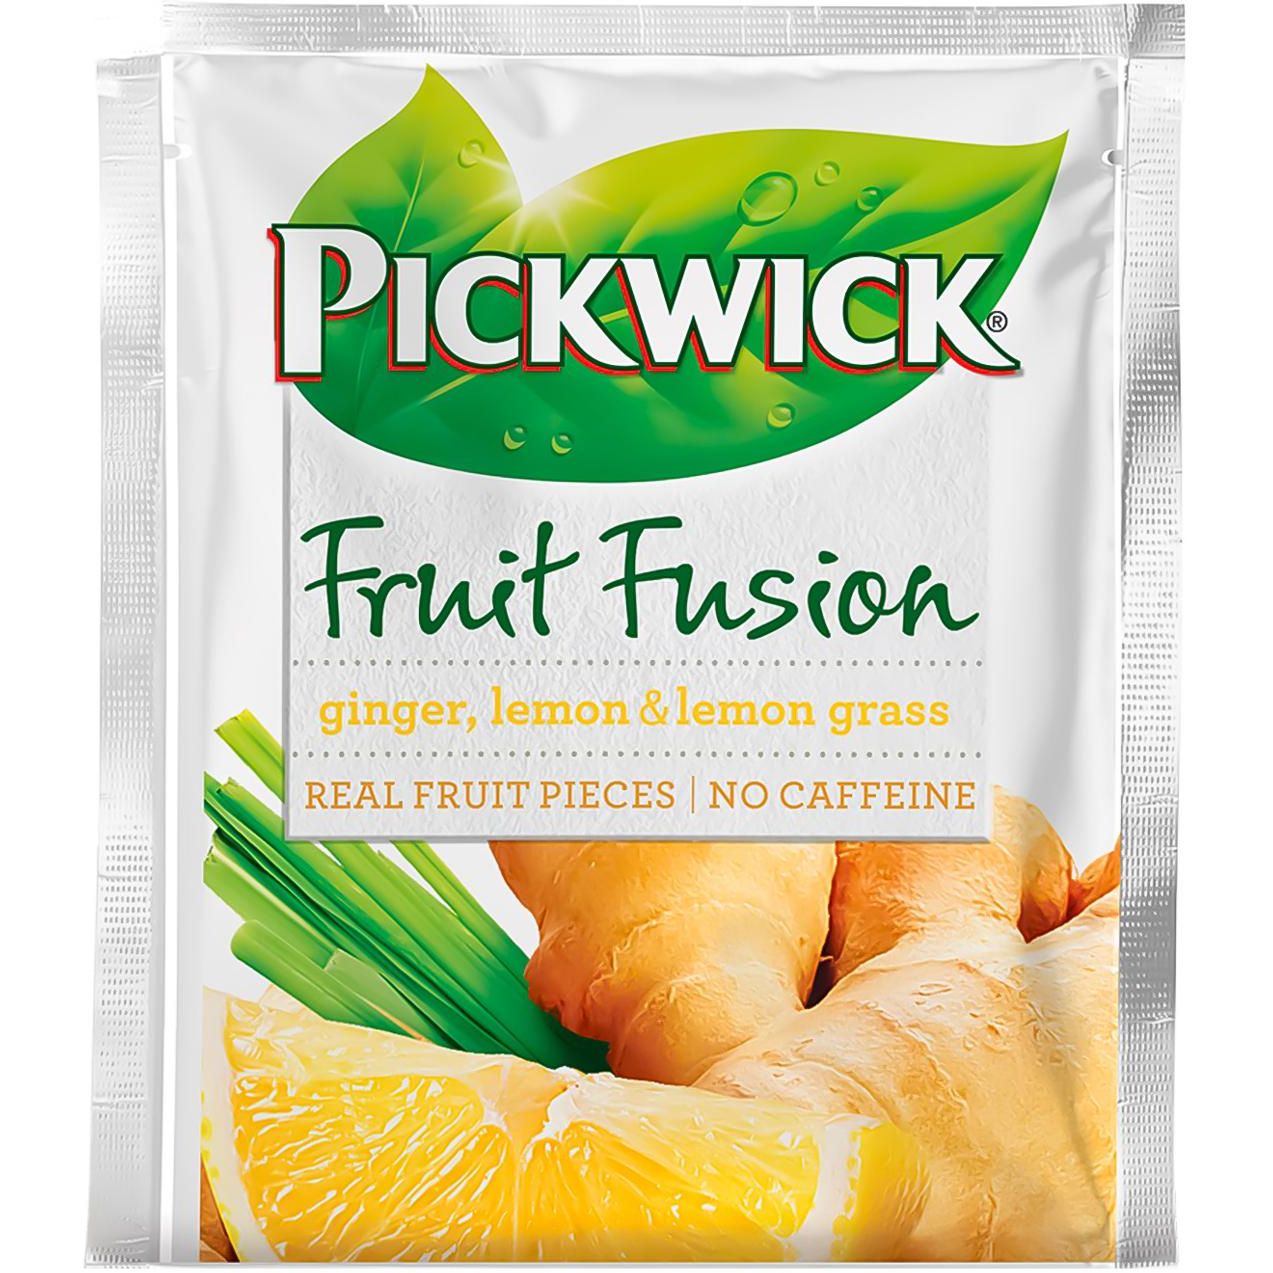 Чай фруктово-травяной Pickwick имбирь-лемонграсс, 30 г (20 шт. х 1.5 г) (907484) - фото 2